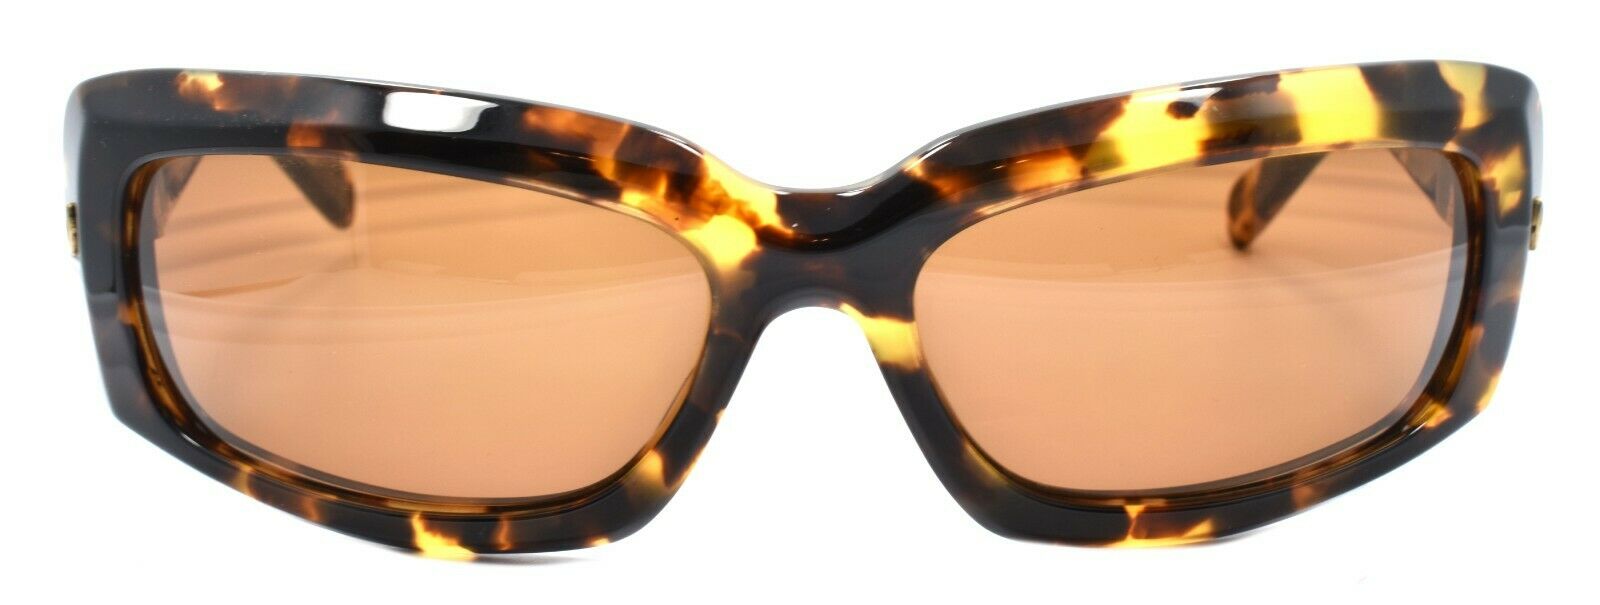 2-Oliver Peoples Ingenue DTB Women's Sunglasses Tortoise / Brown JAPAN-Does not apply-IKSpecs